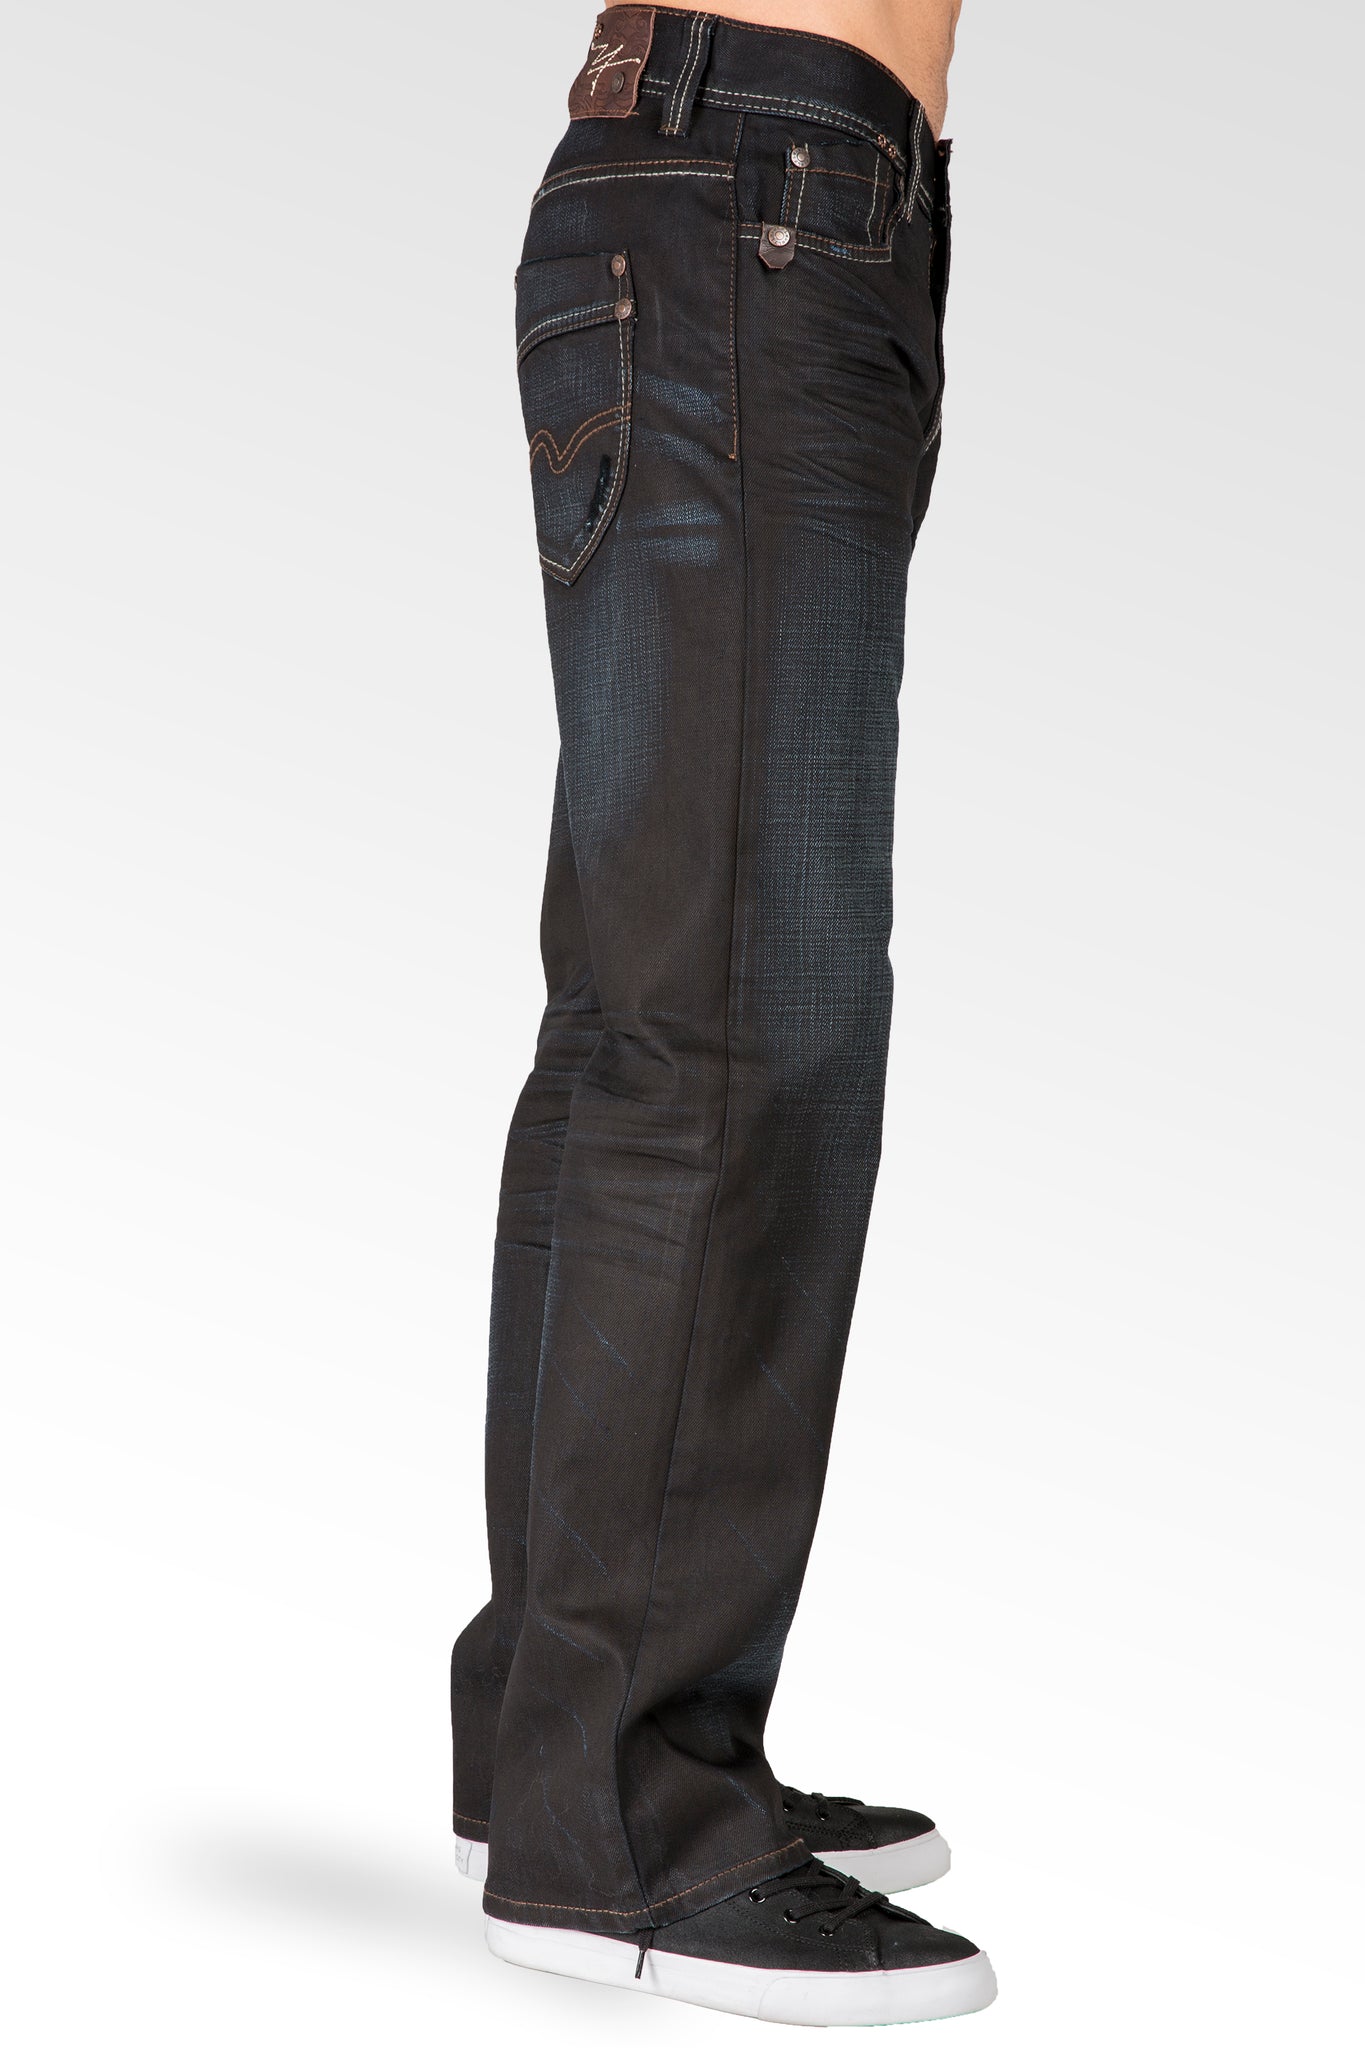 Men's Relaxed Bootcut Black Premium Denim 5 Pocket Jeans Black Overspray Coating